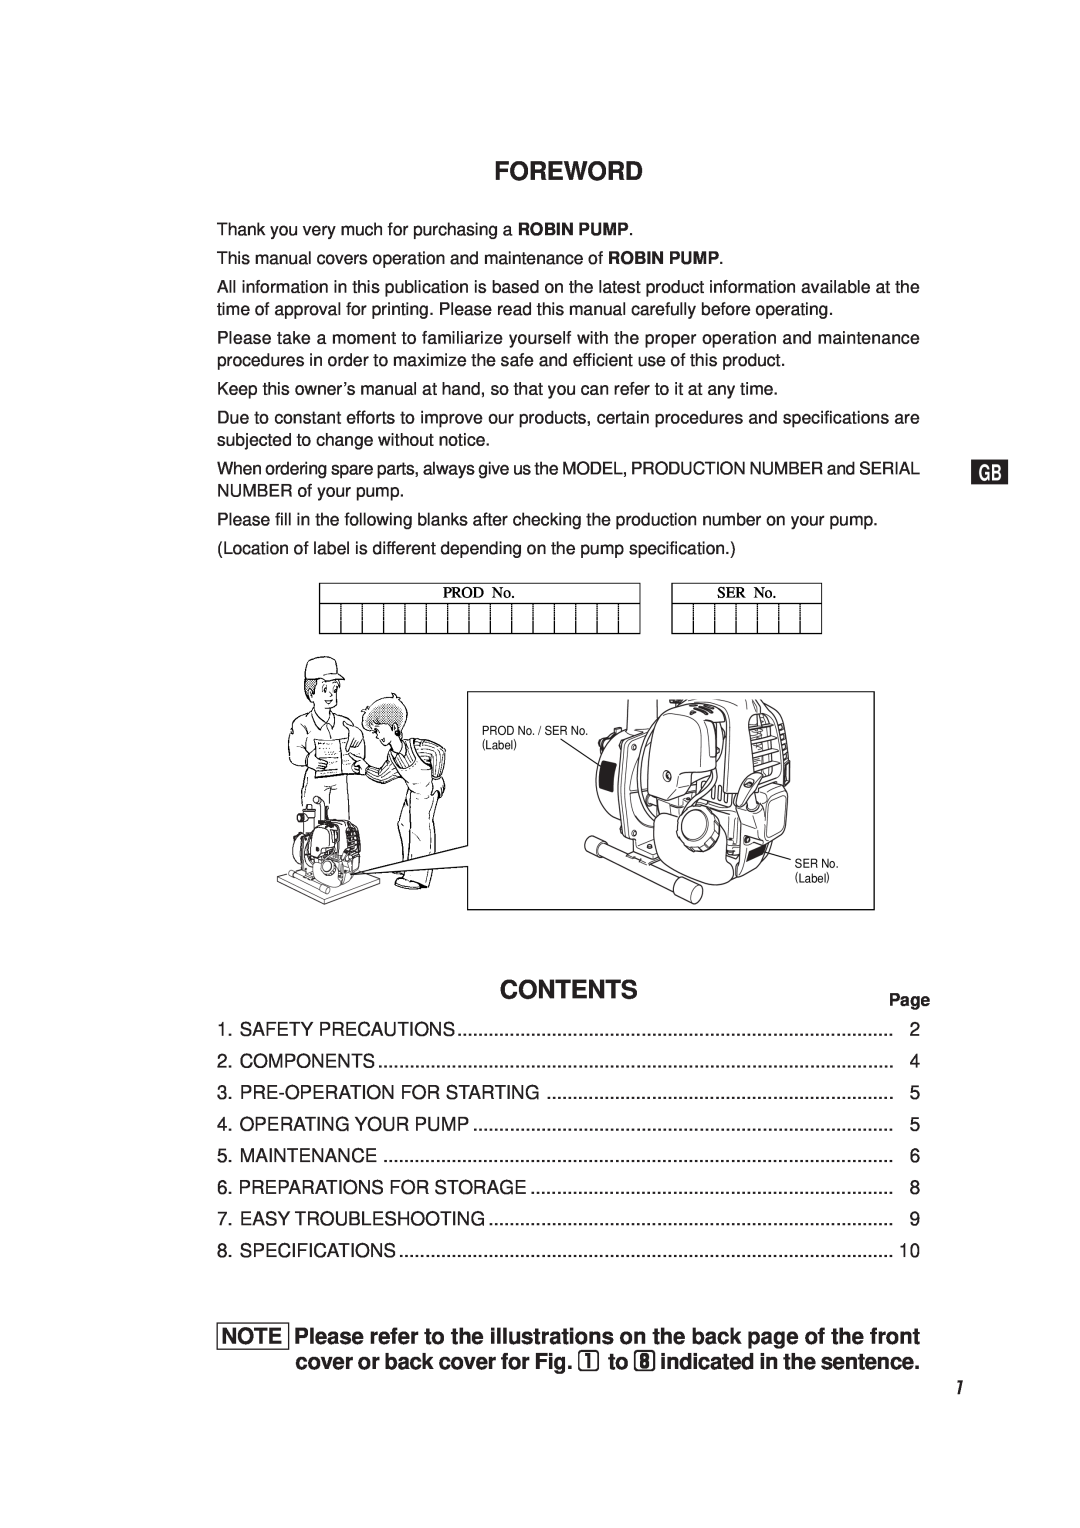 Subaru Robin Power Products PKV101 manual Foreword, Contents 